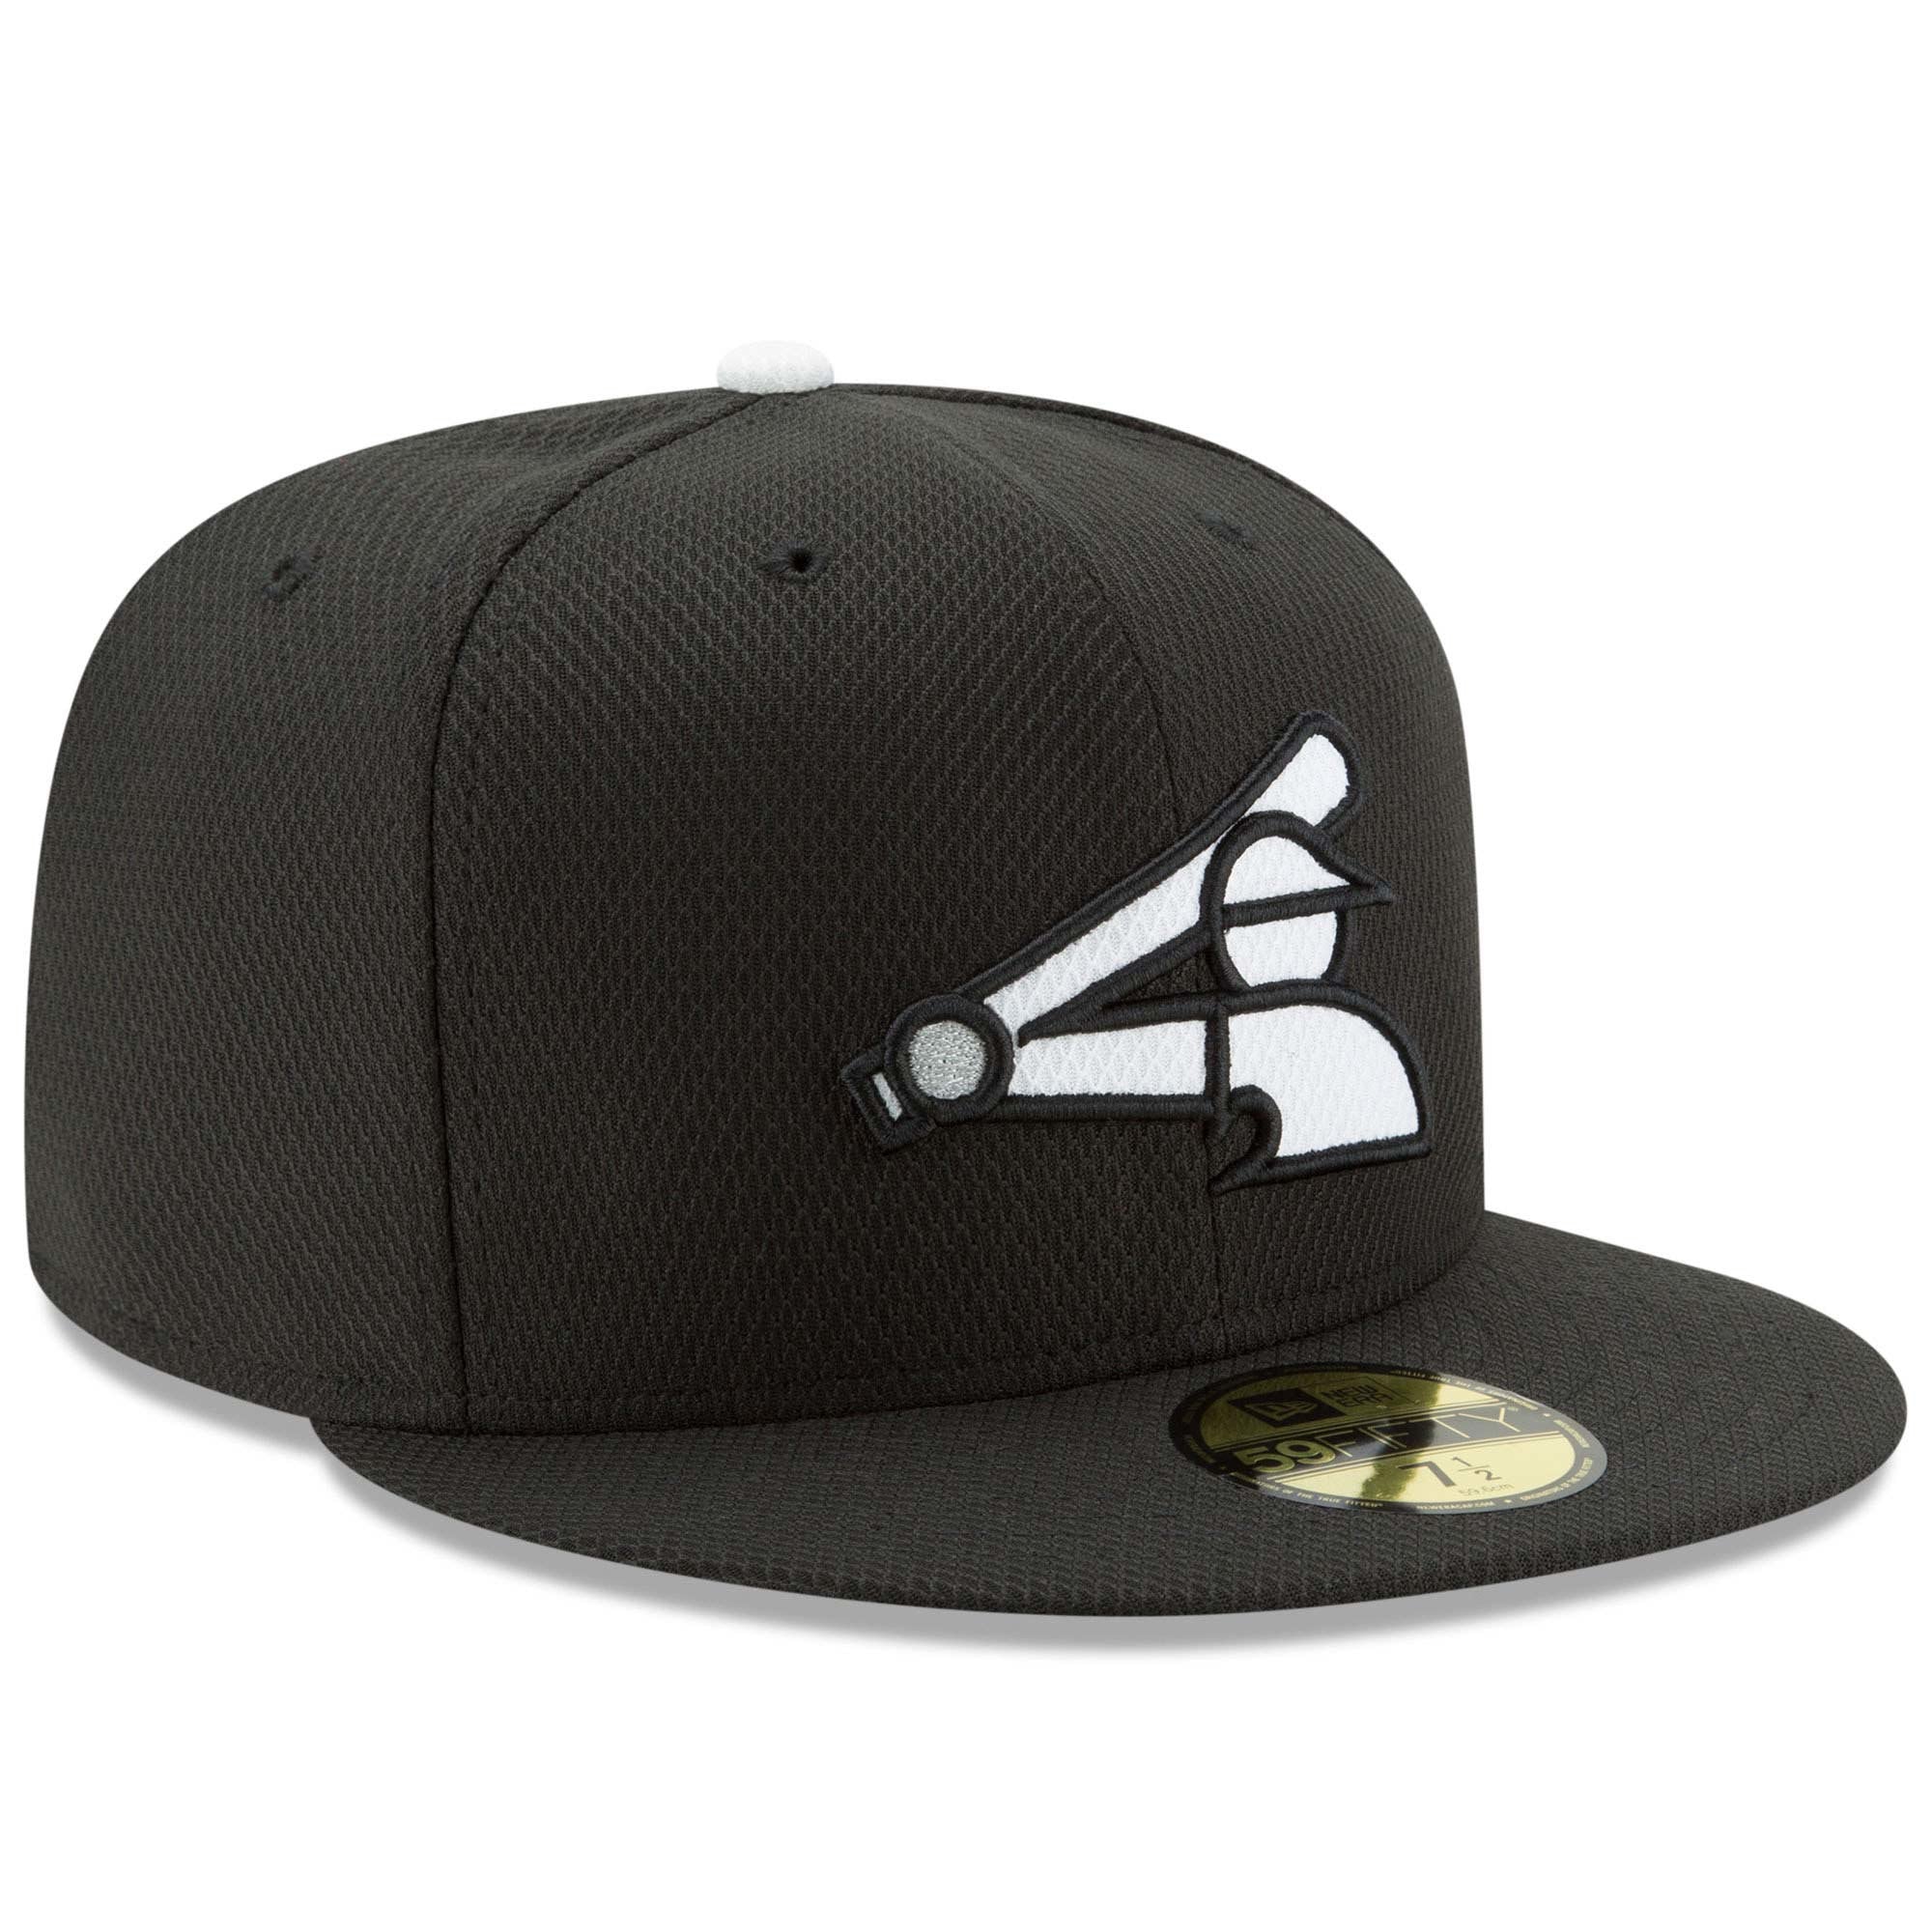 New Era 59Fifty Cap Men's Team Chicago White Sox Diamond Era Fitted Hat